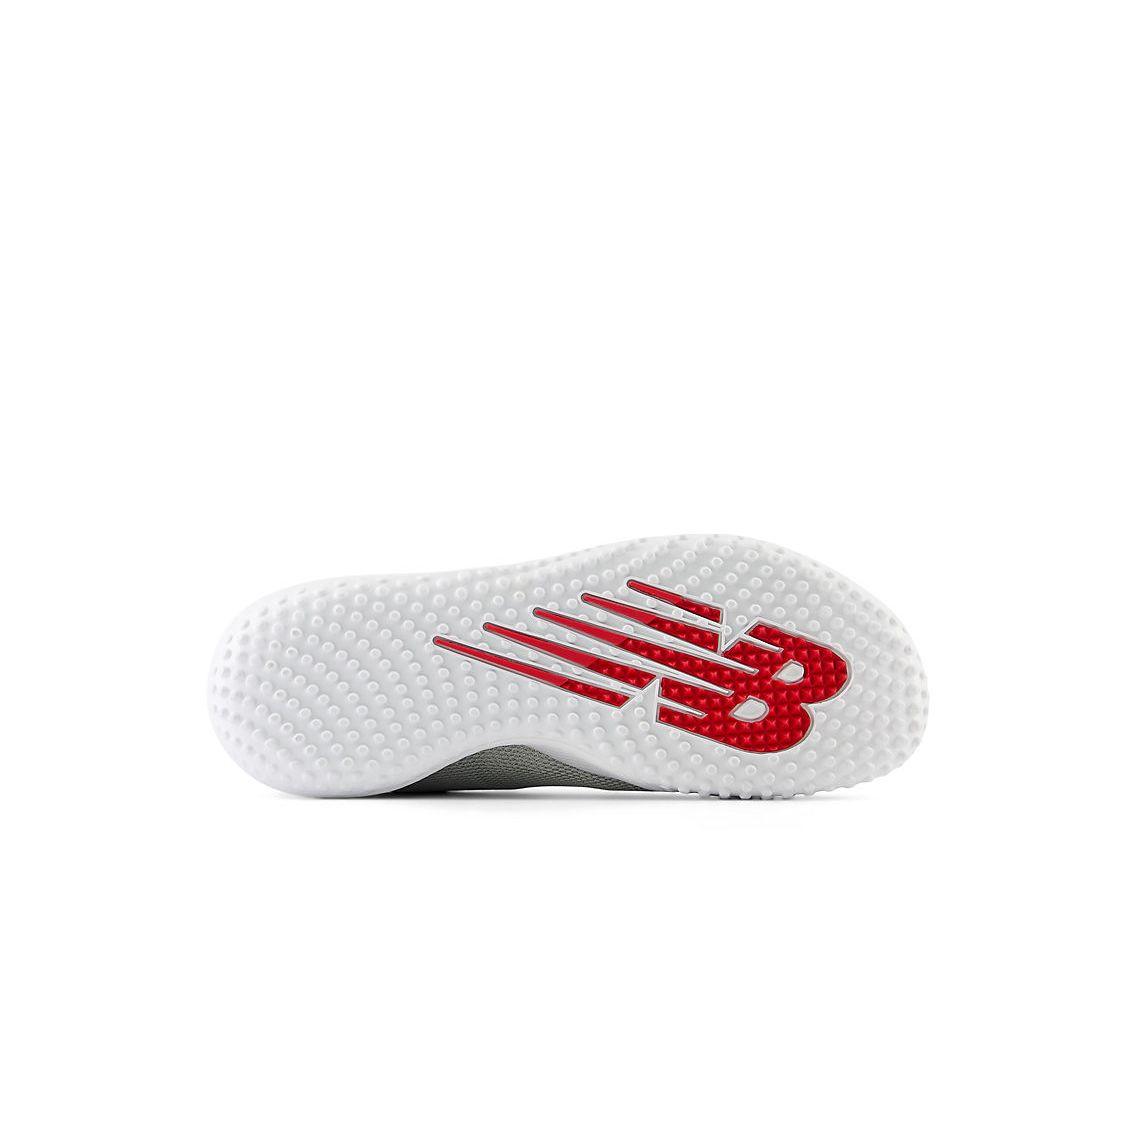 New Balance Men's FuelCell 4040 V7 Turf Baseball Shoes - Raincloud / Optic White - T4040TG7 - Smash It Sports